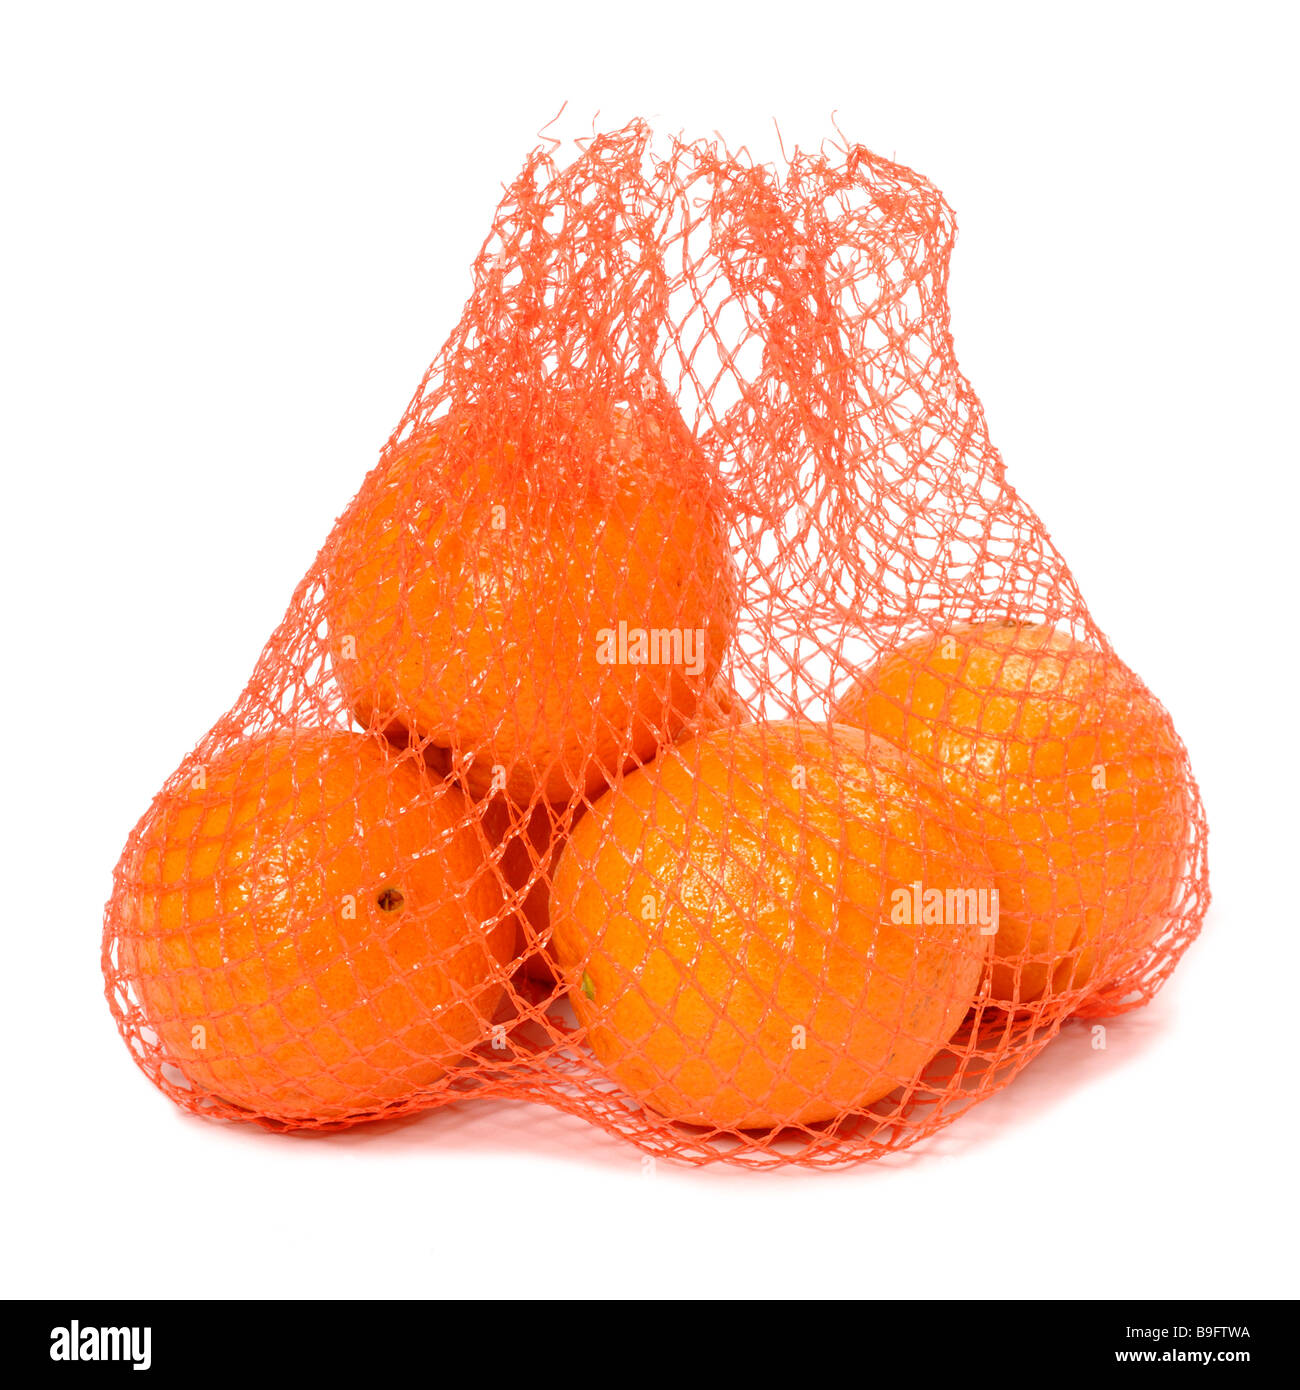 Bag of oranges Stock Photo